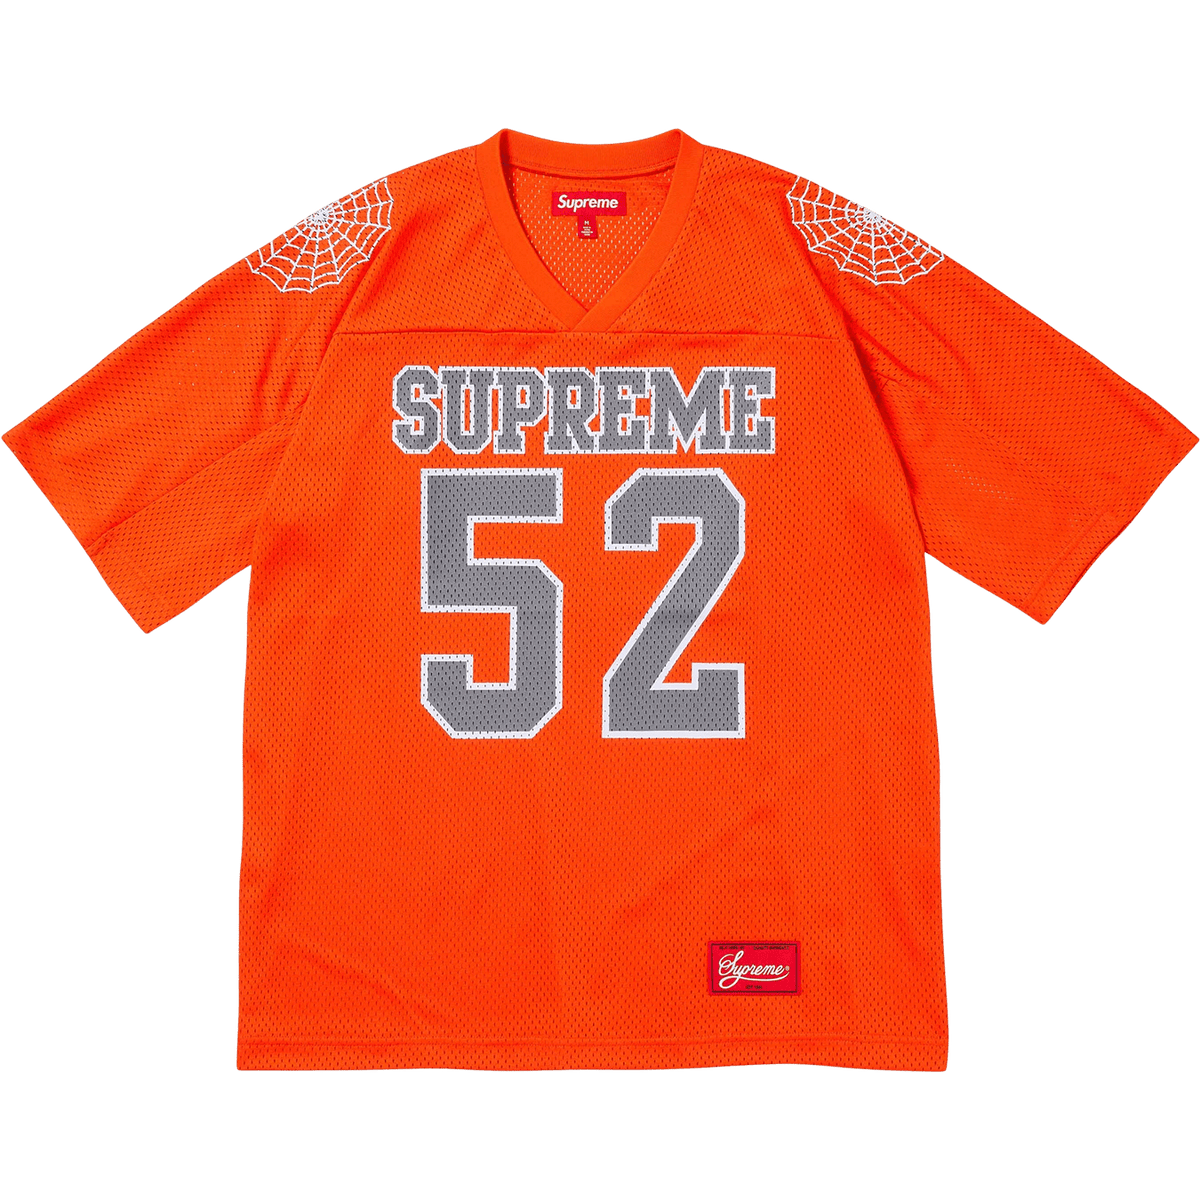 Supreme Spiderweb Football Jersey 'Orange' - UrlfreezeShops